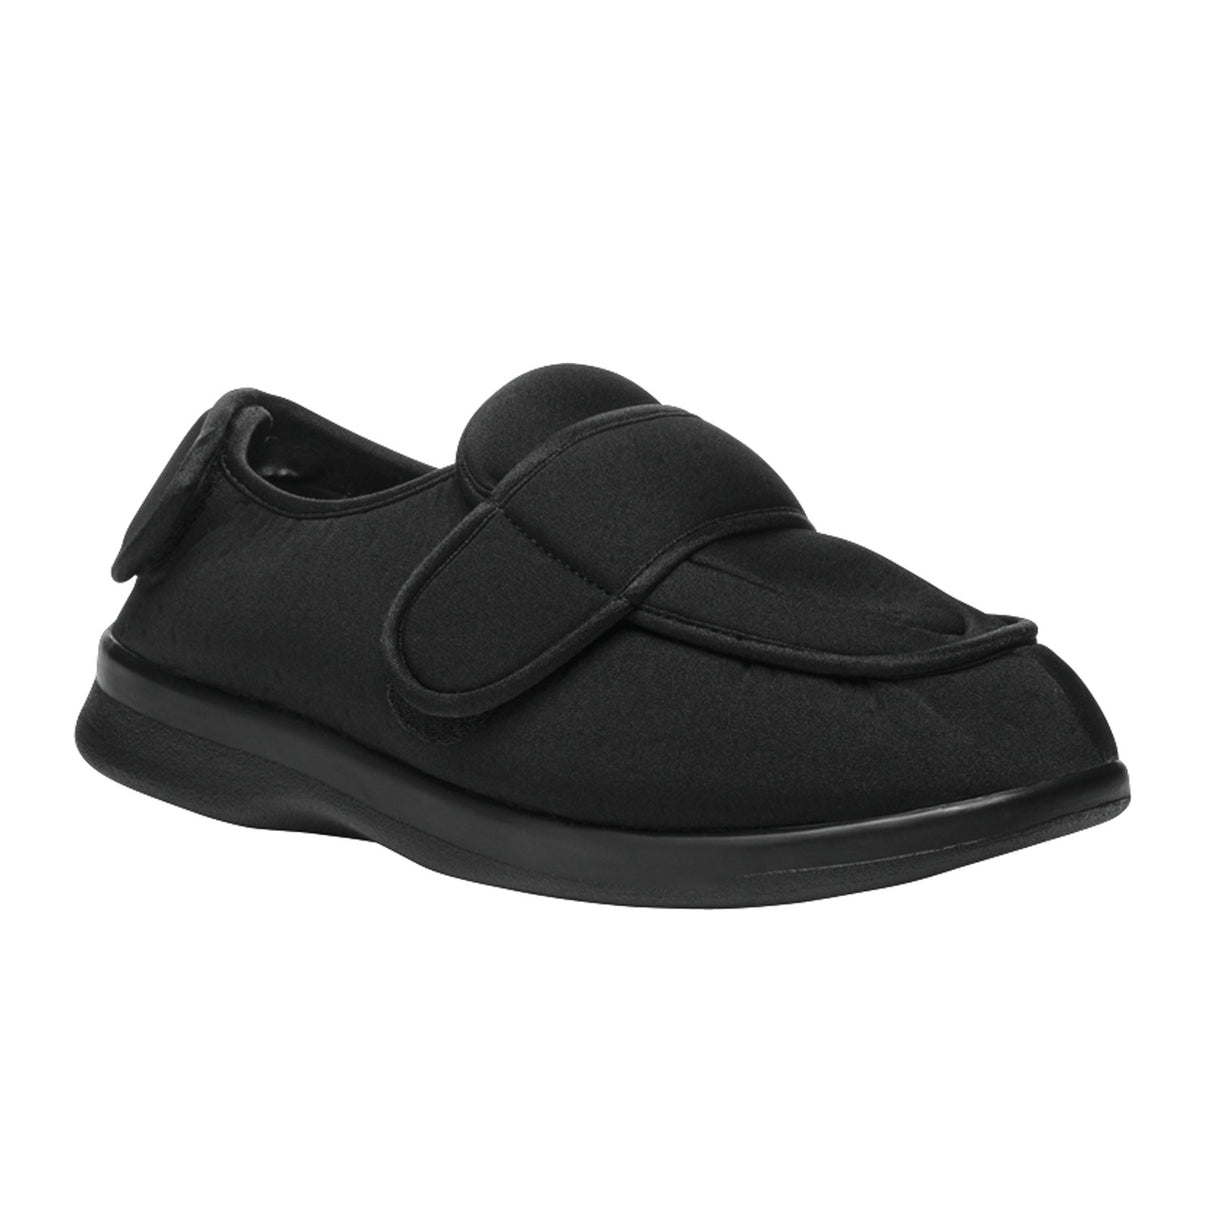 Propet Cronus Slipper (Men) - Black Dress-Casual - Slippers - The Heel Shoe Fitters